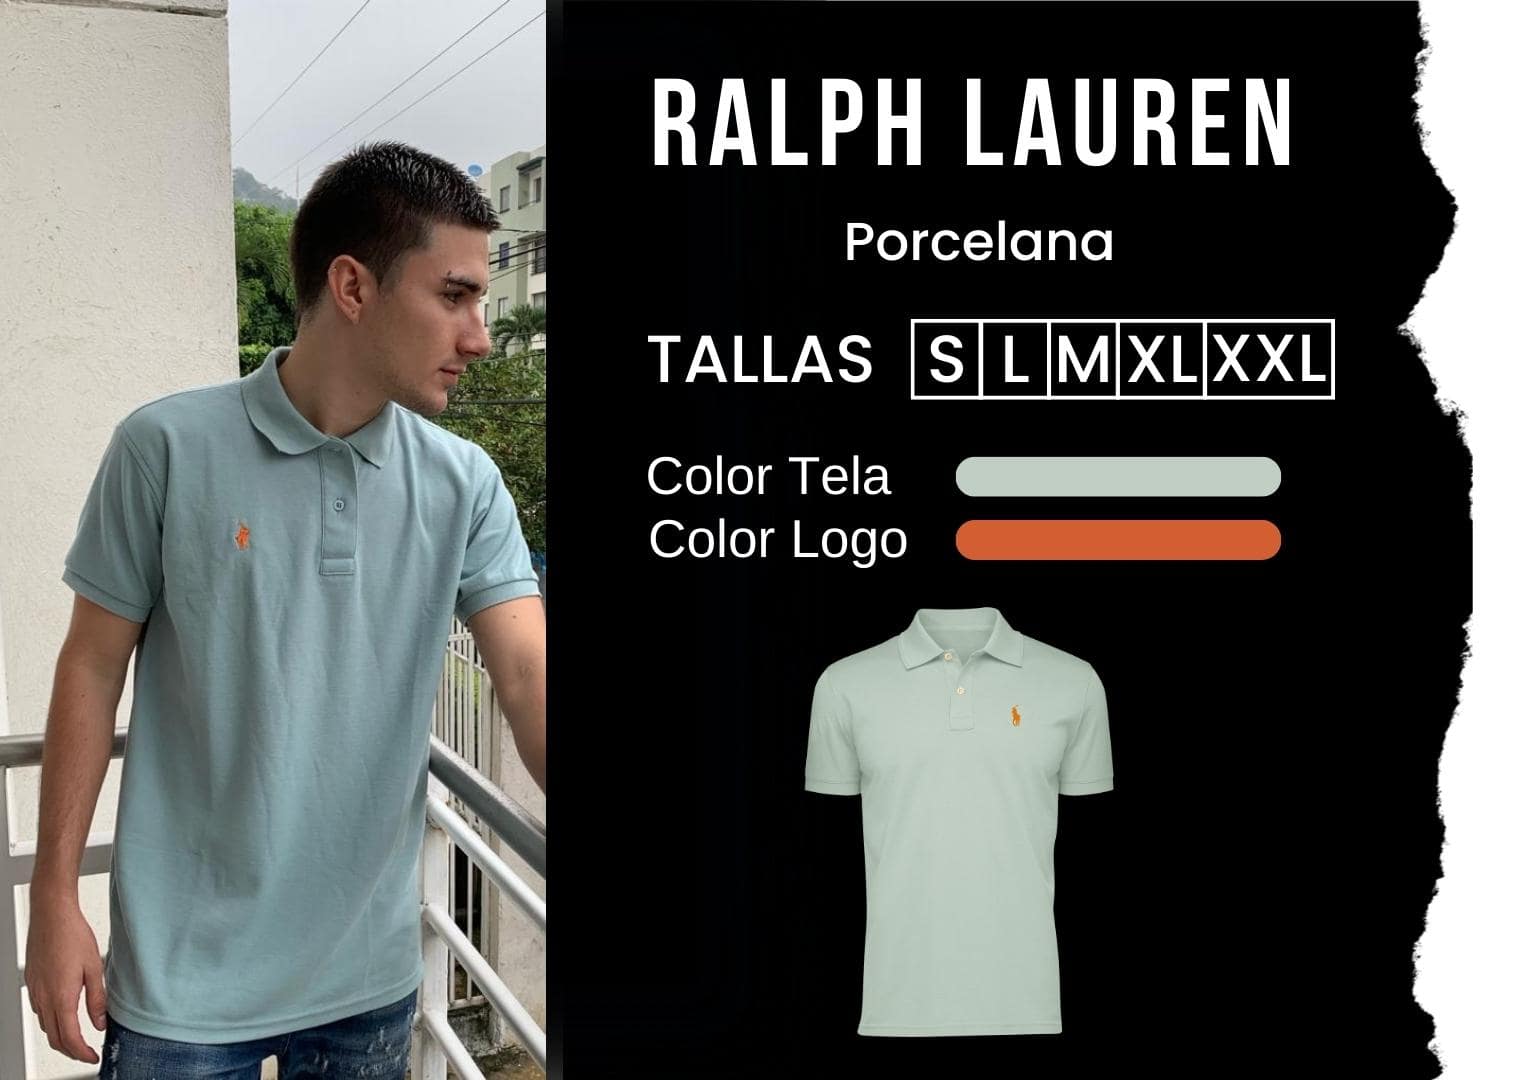 camiseta Ralph Lauren polo hombre tienda olevan color porcelana